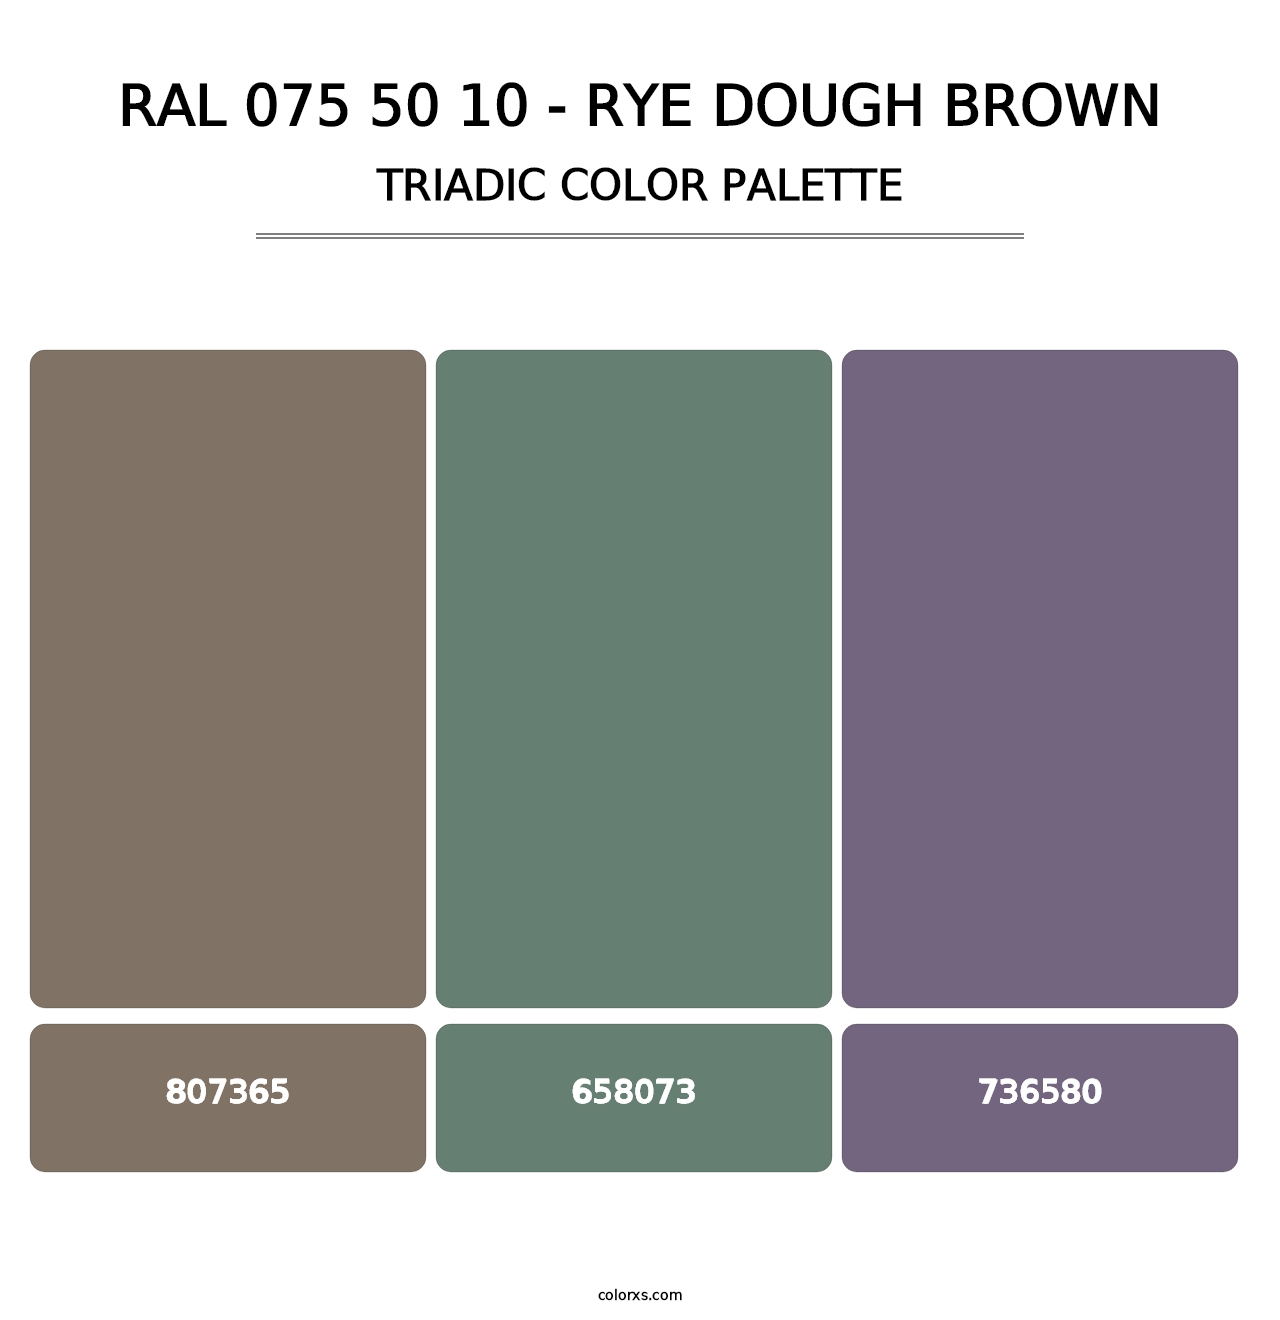 RAL 075 50 10 - Rye Dough Brown - Triadic Color Palette